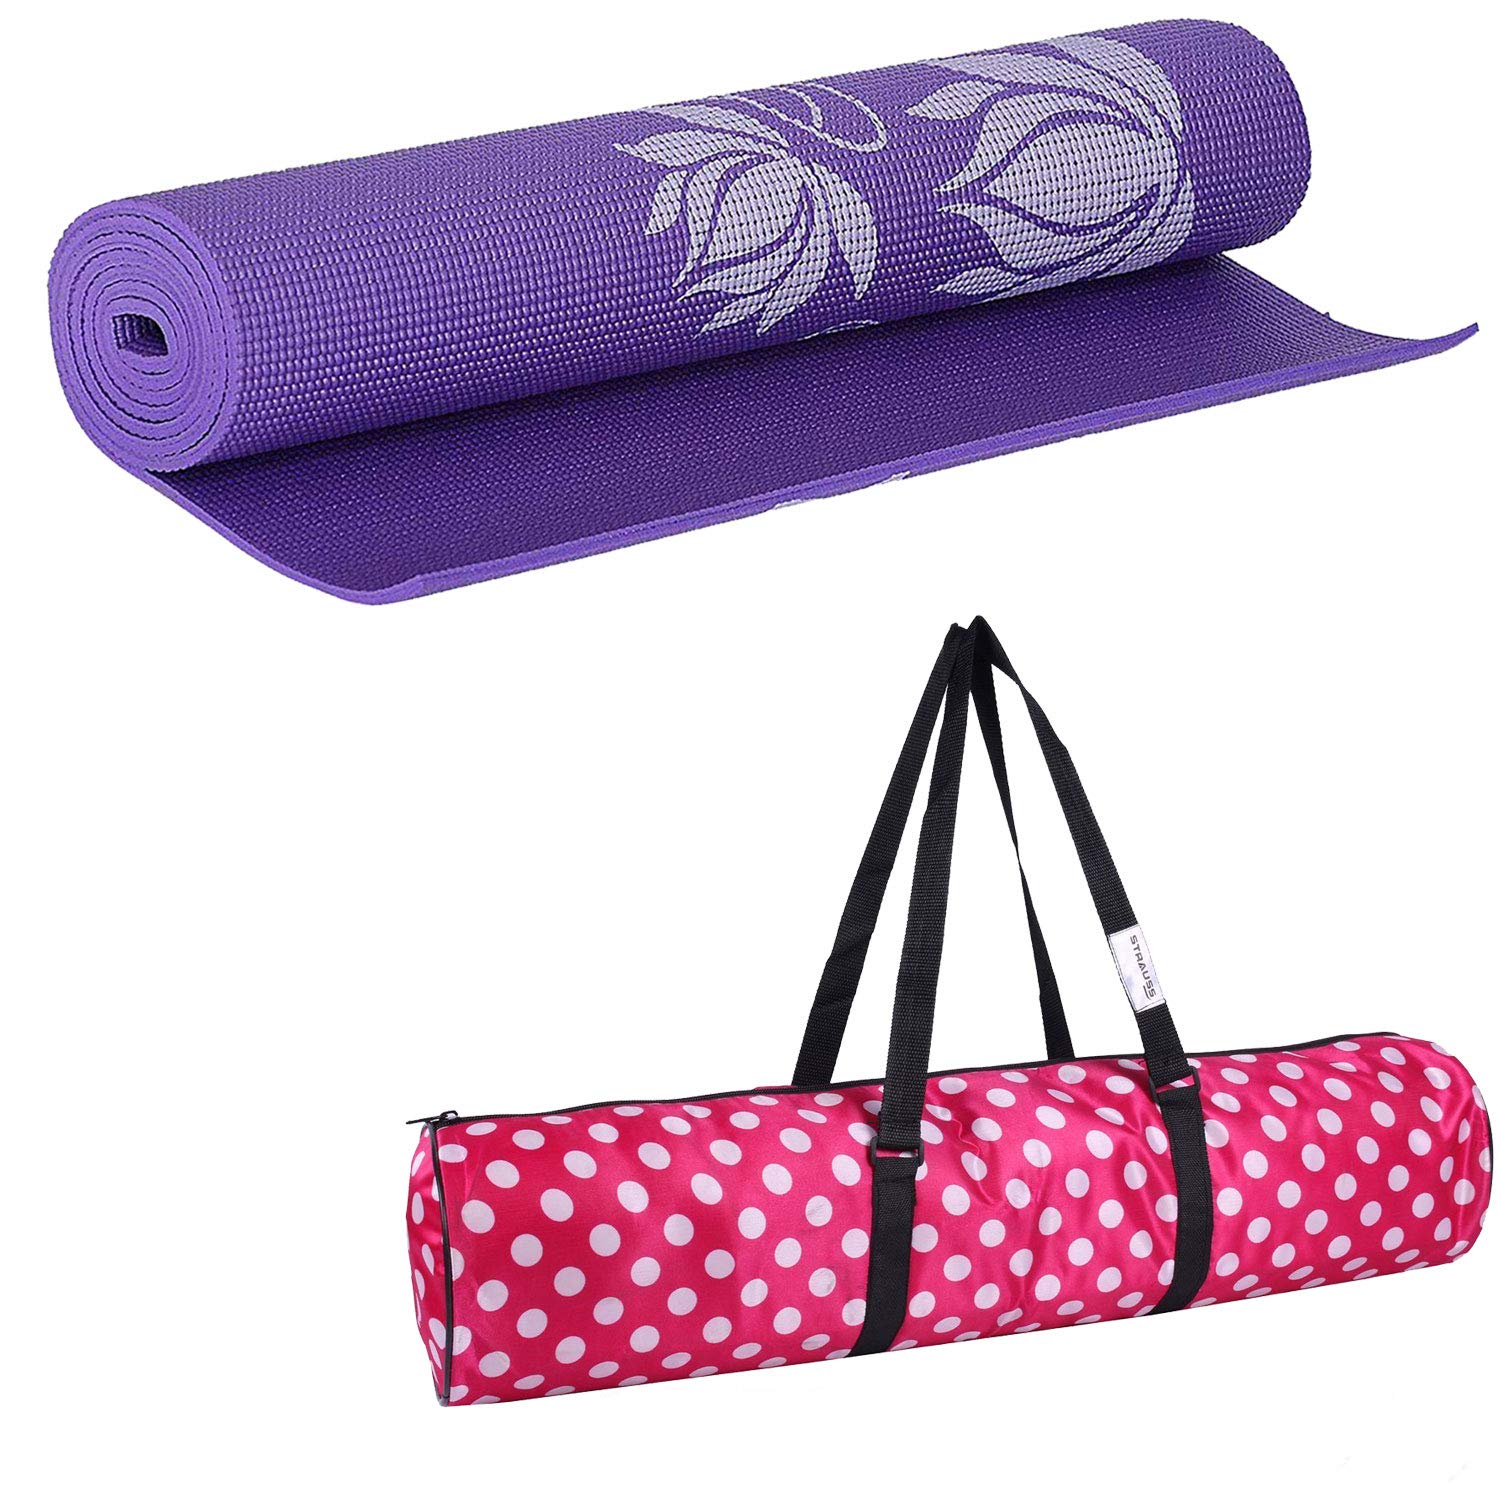 Strauss Yoga Mat, 6mm (Purple Floral) and Yoga Mat Bag,Polka Dots Pink (Full Zip)